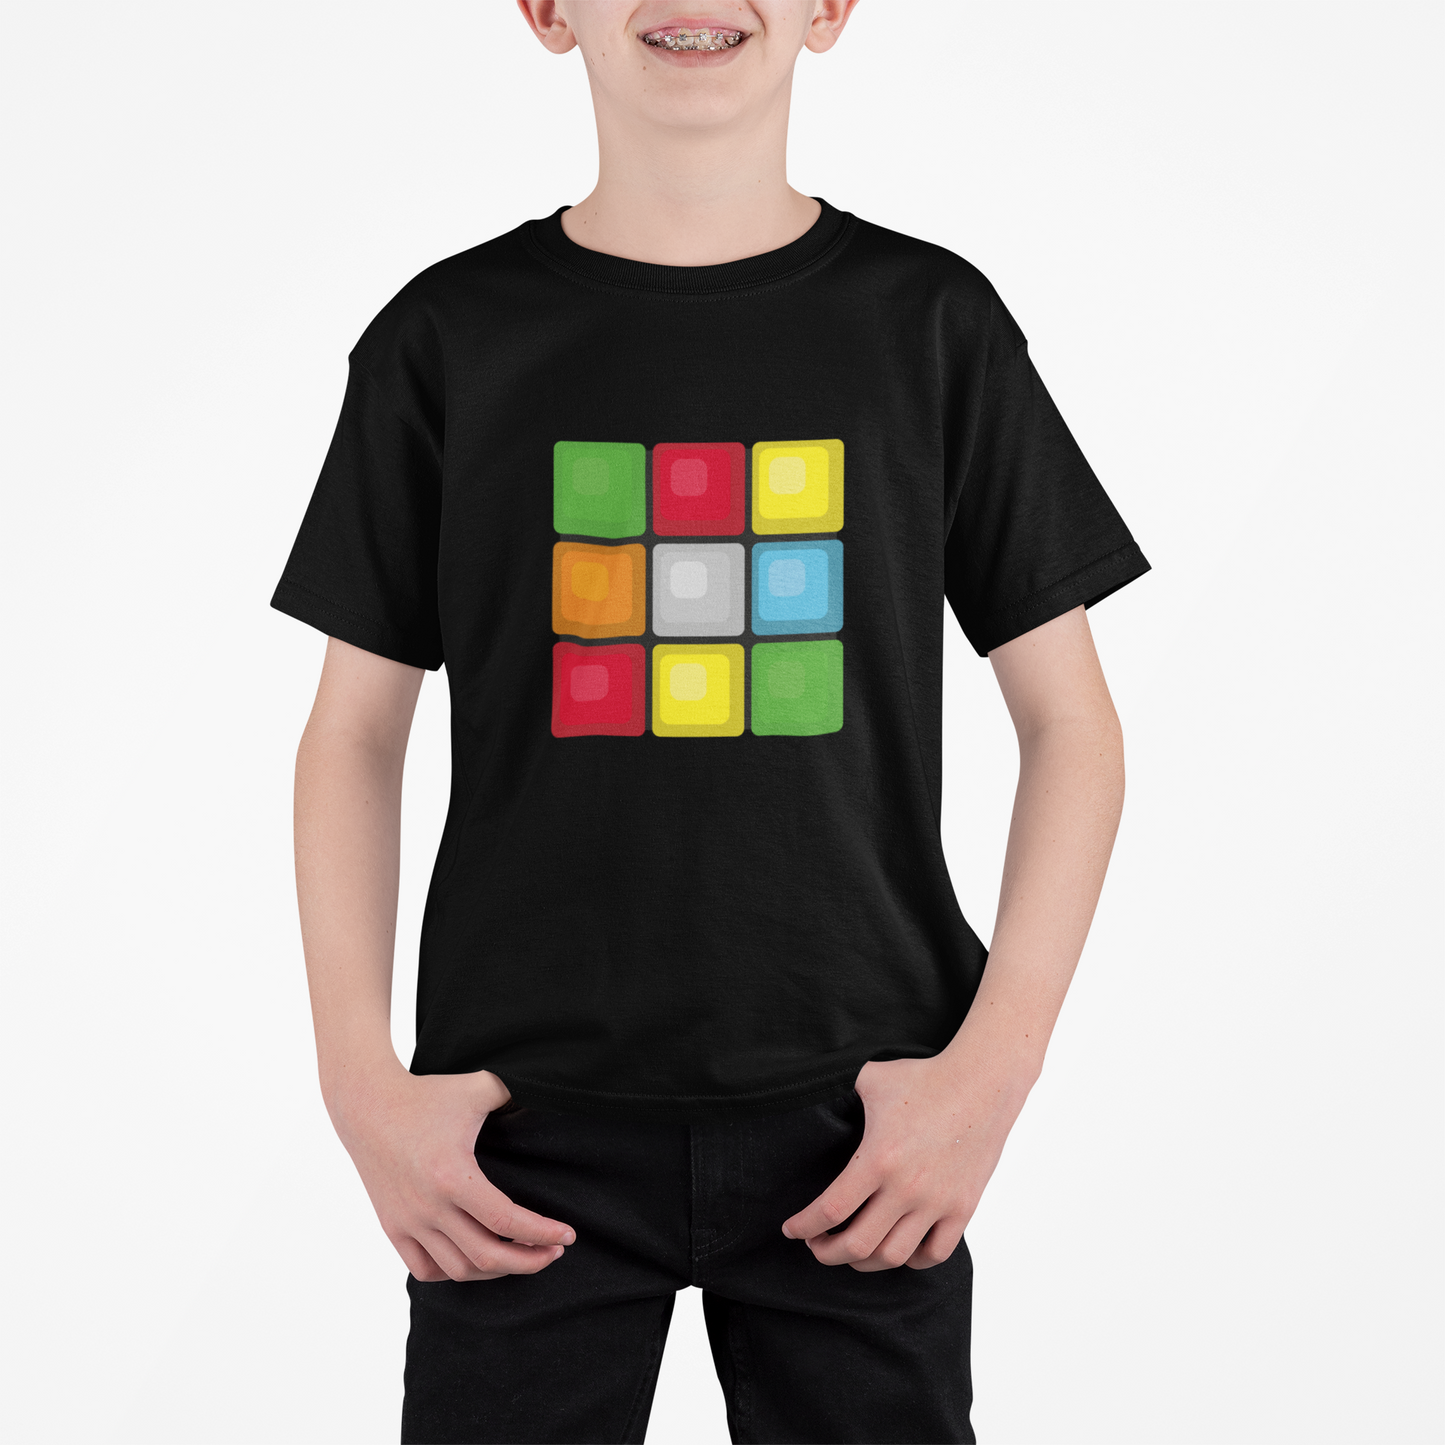 Rubiks Cube T-shirt for Boys Black